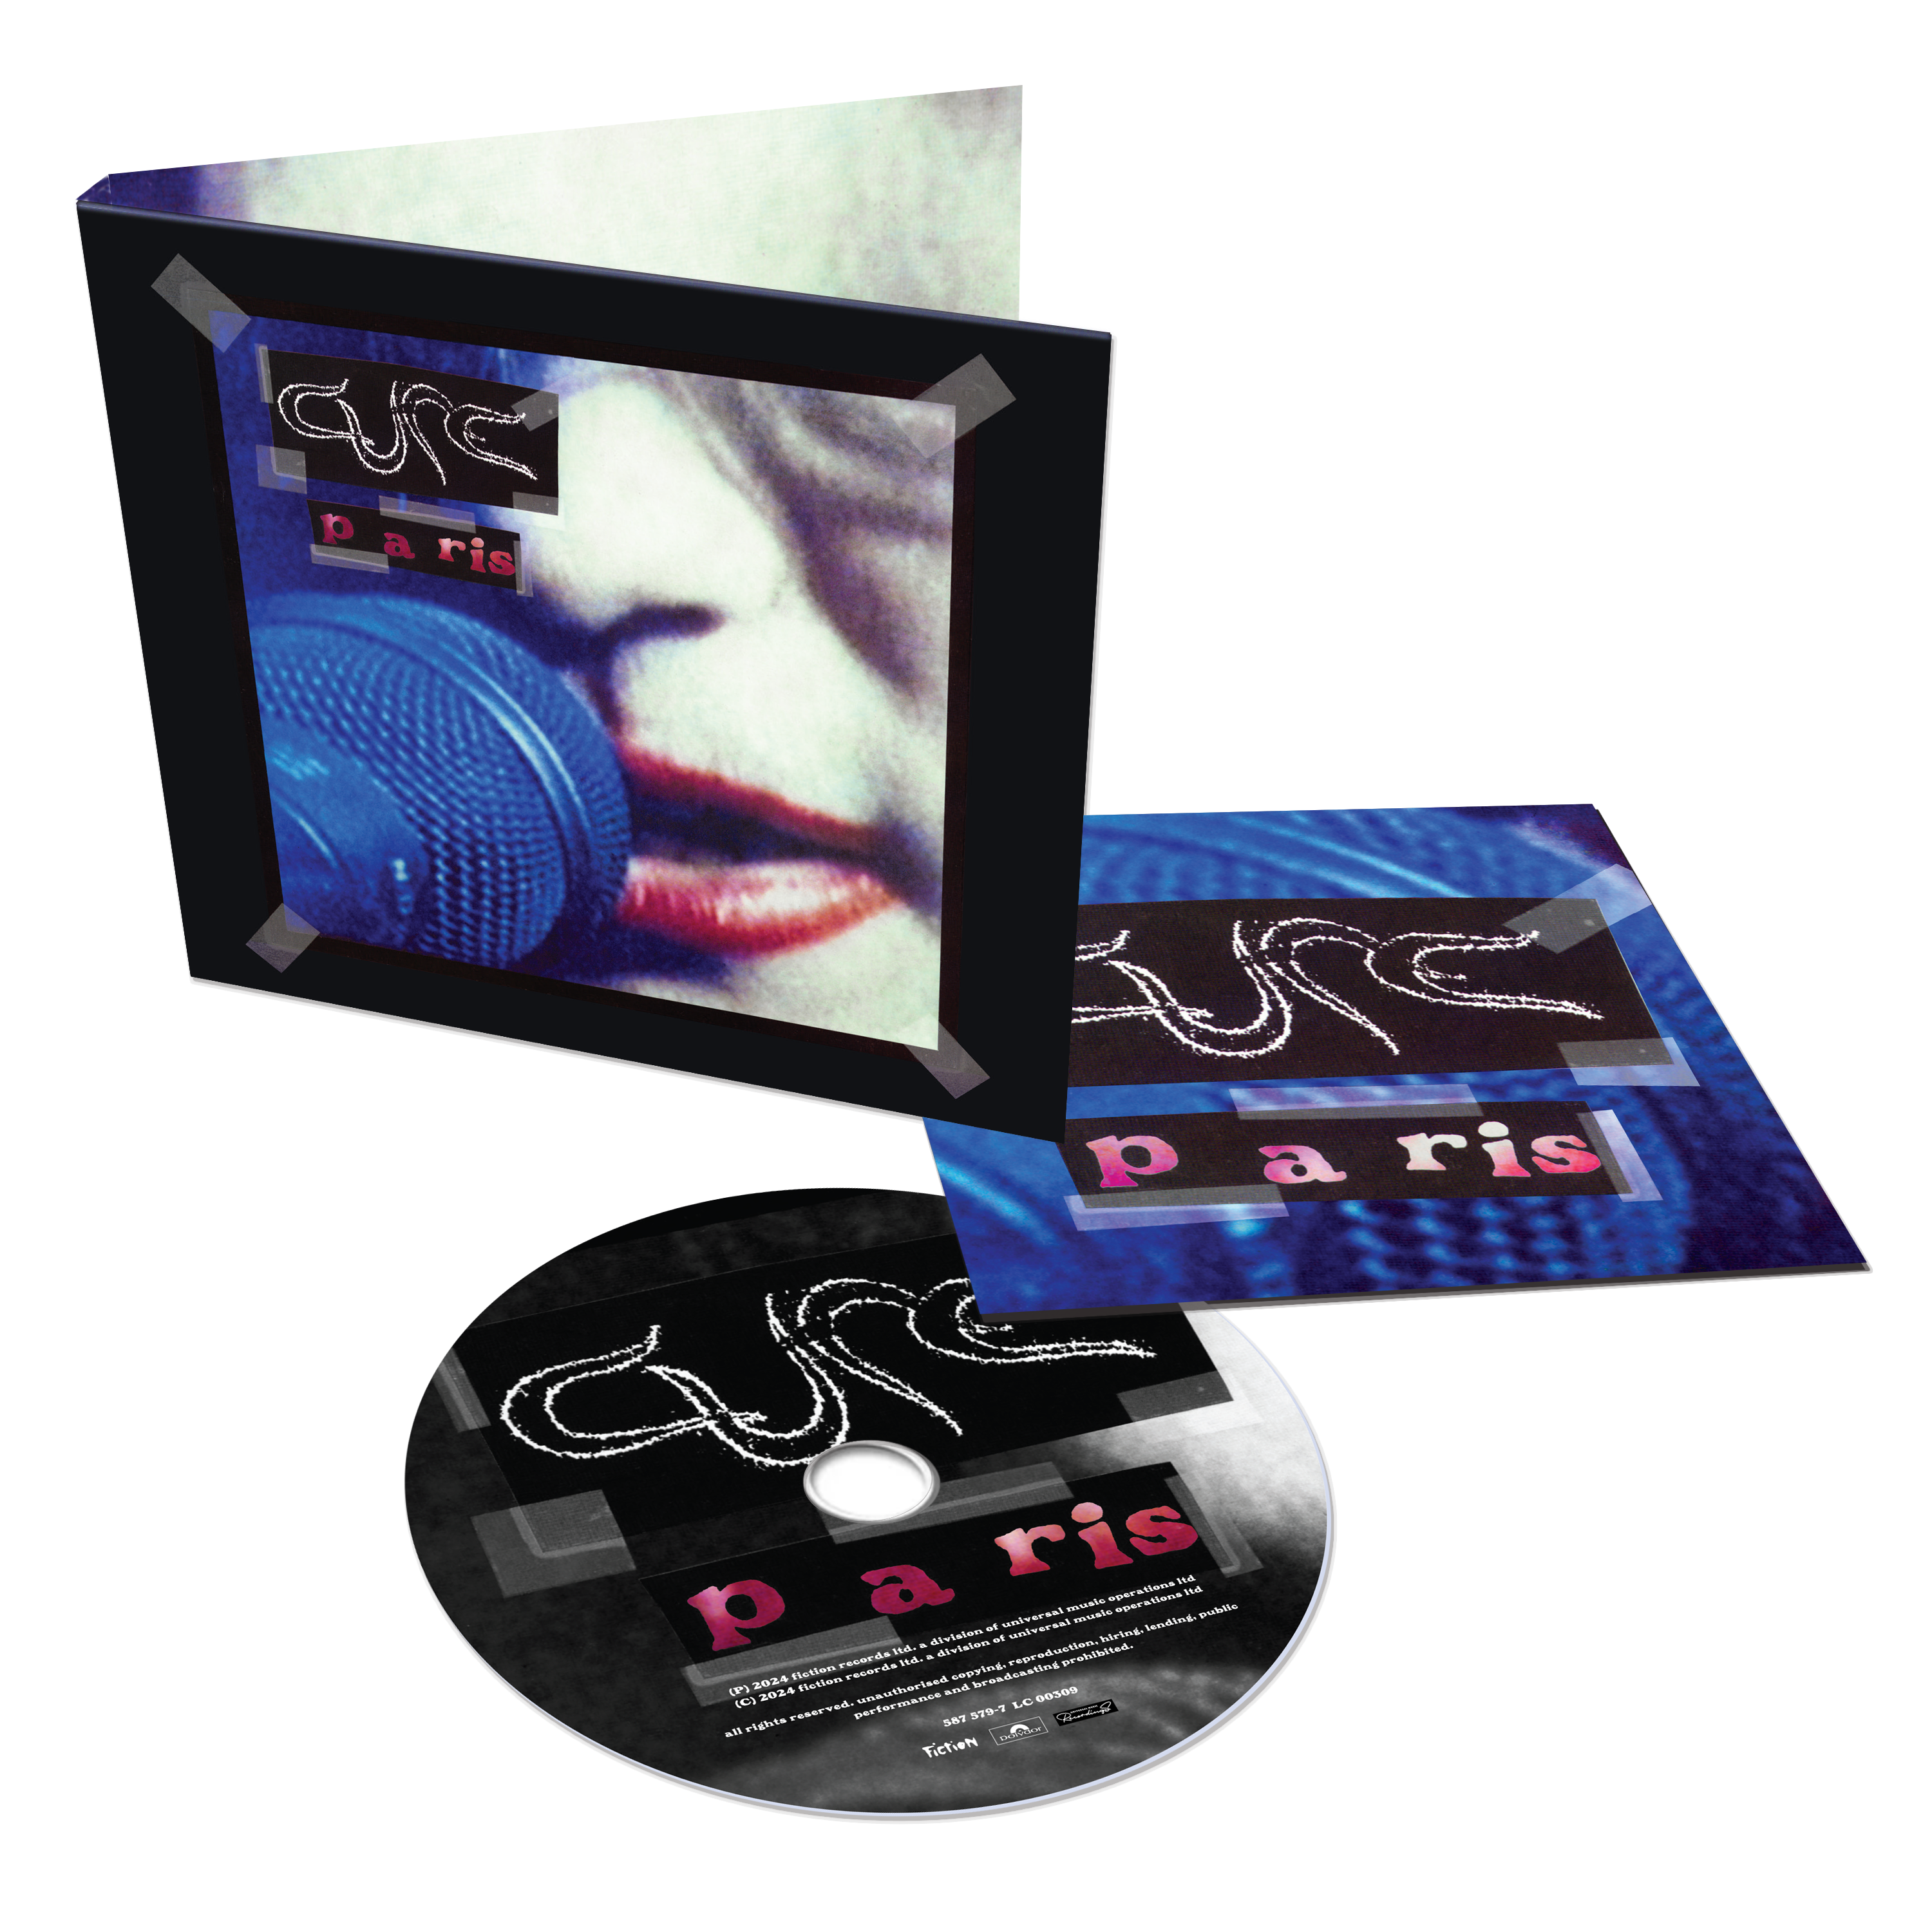 Paris (30th Anniversary Edition): CD - Cure UK